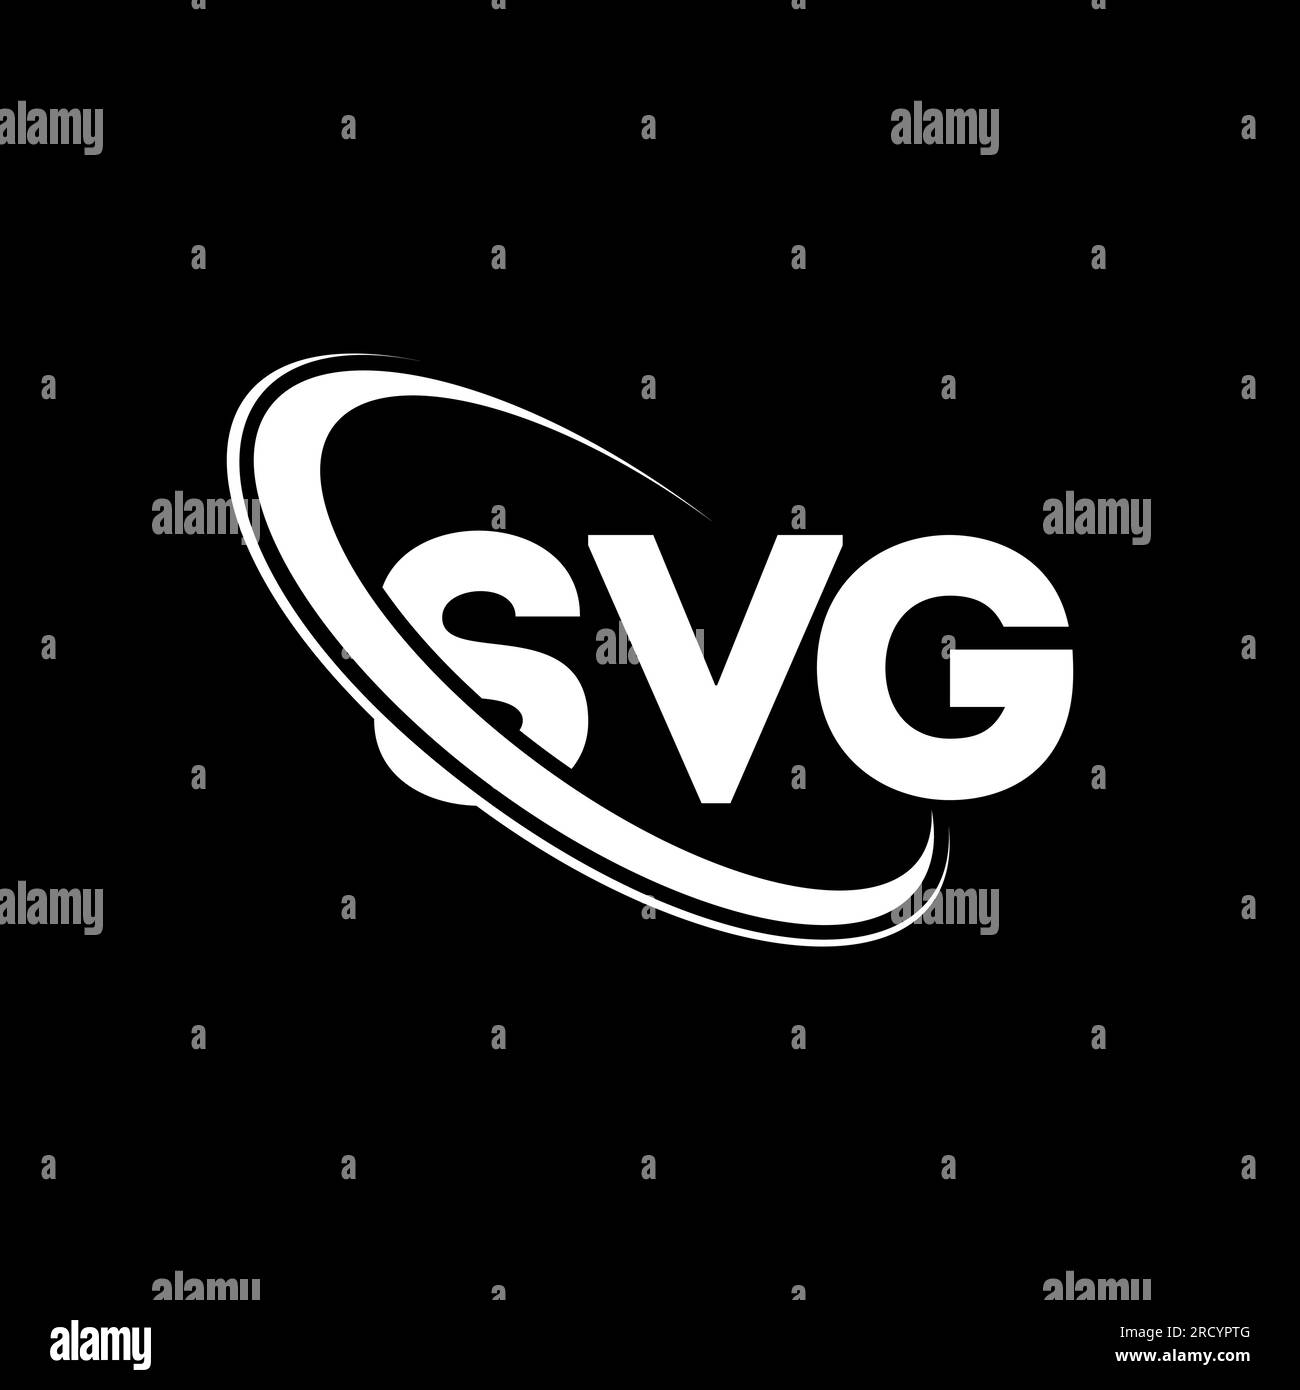 SVG logo. SVG letter. SVG letter logo design. Initials SVG logo linked with circle and uppercase monogram logo. SVG typography for technology, busines Stock Vector